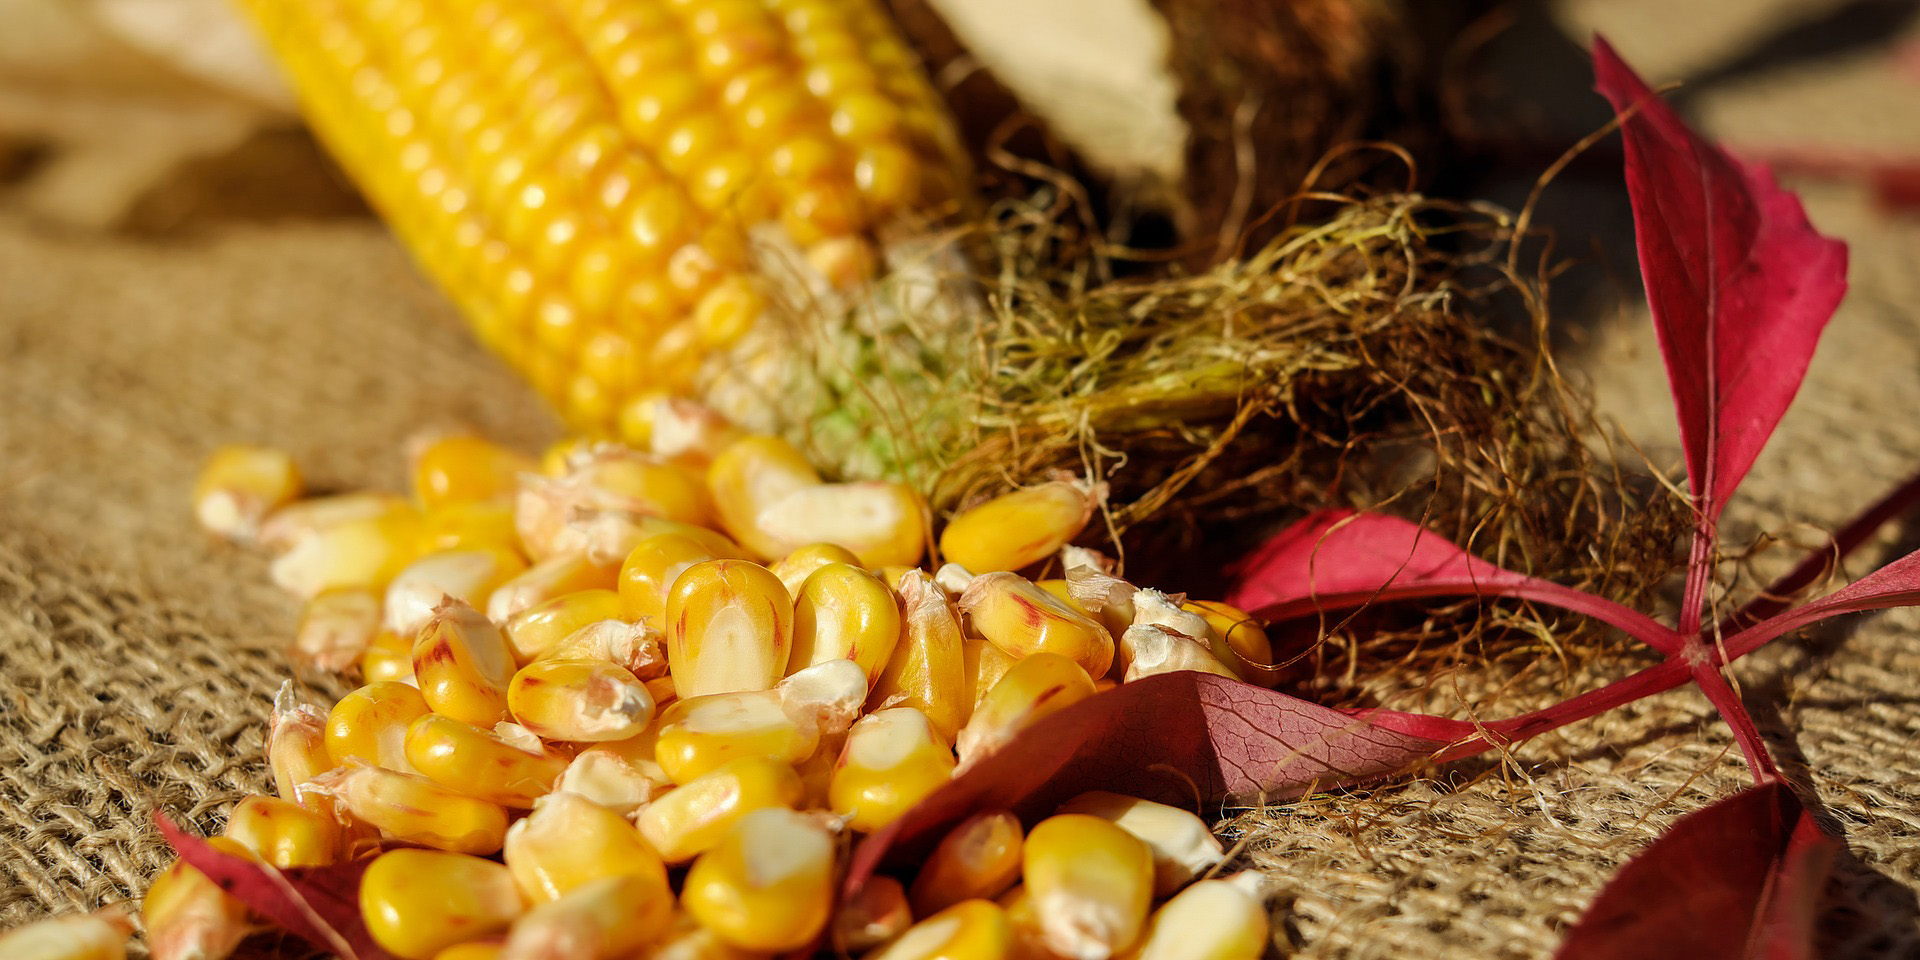 Producción de maíz va a caer 20% por falta de fertilizantes, asegura Anpec | El Imparcial de Oaxaca